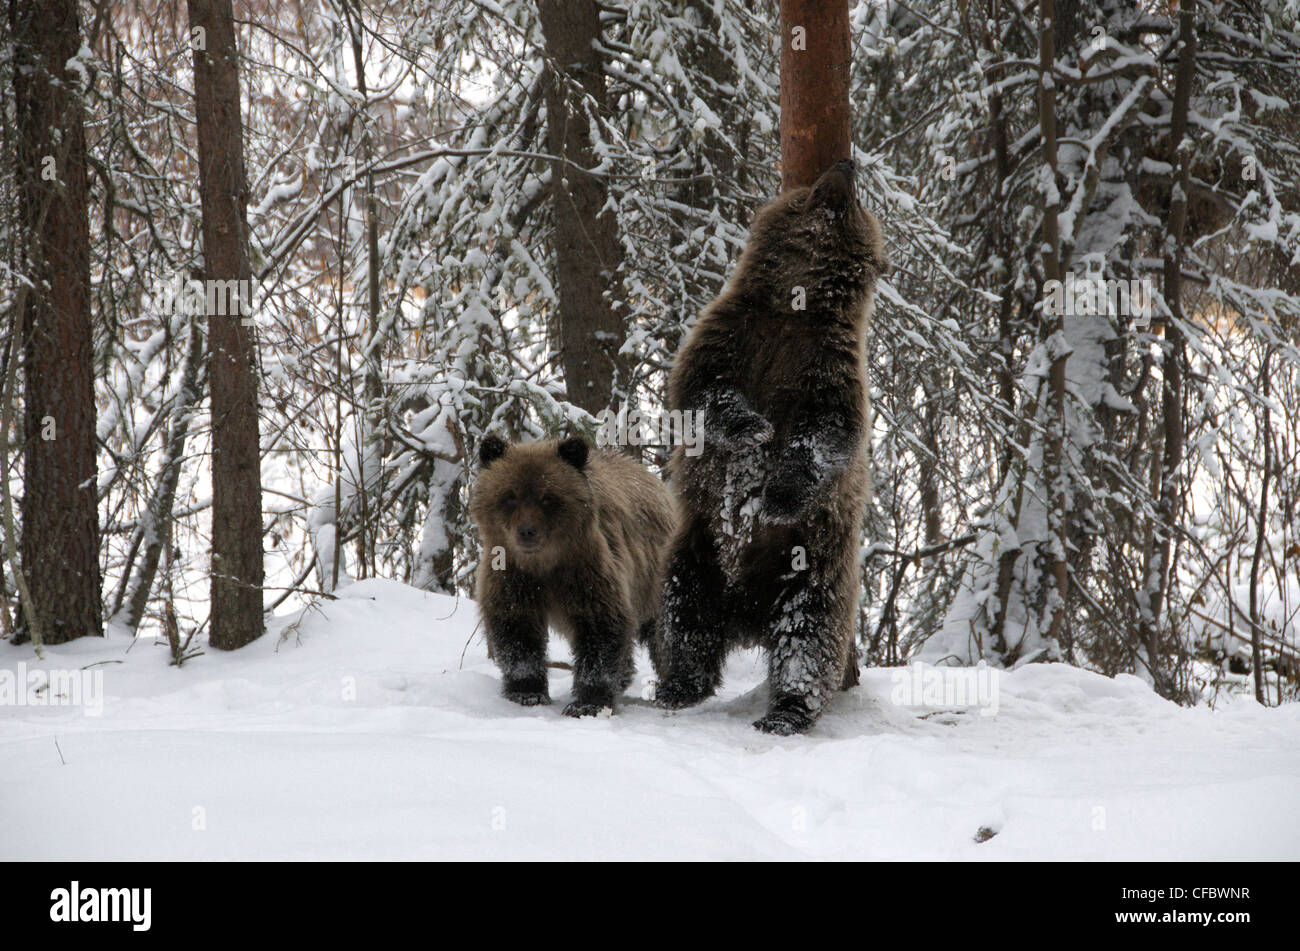 Grizzly Bear Ursus arctos rubbing deposit/acquire Stock Photo